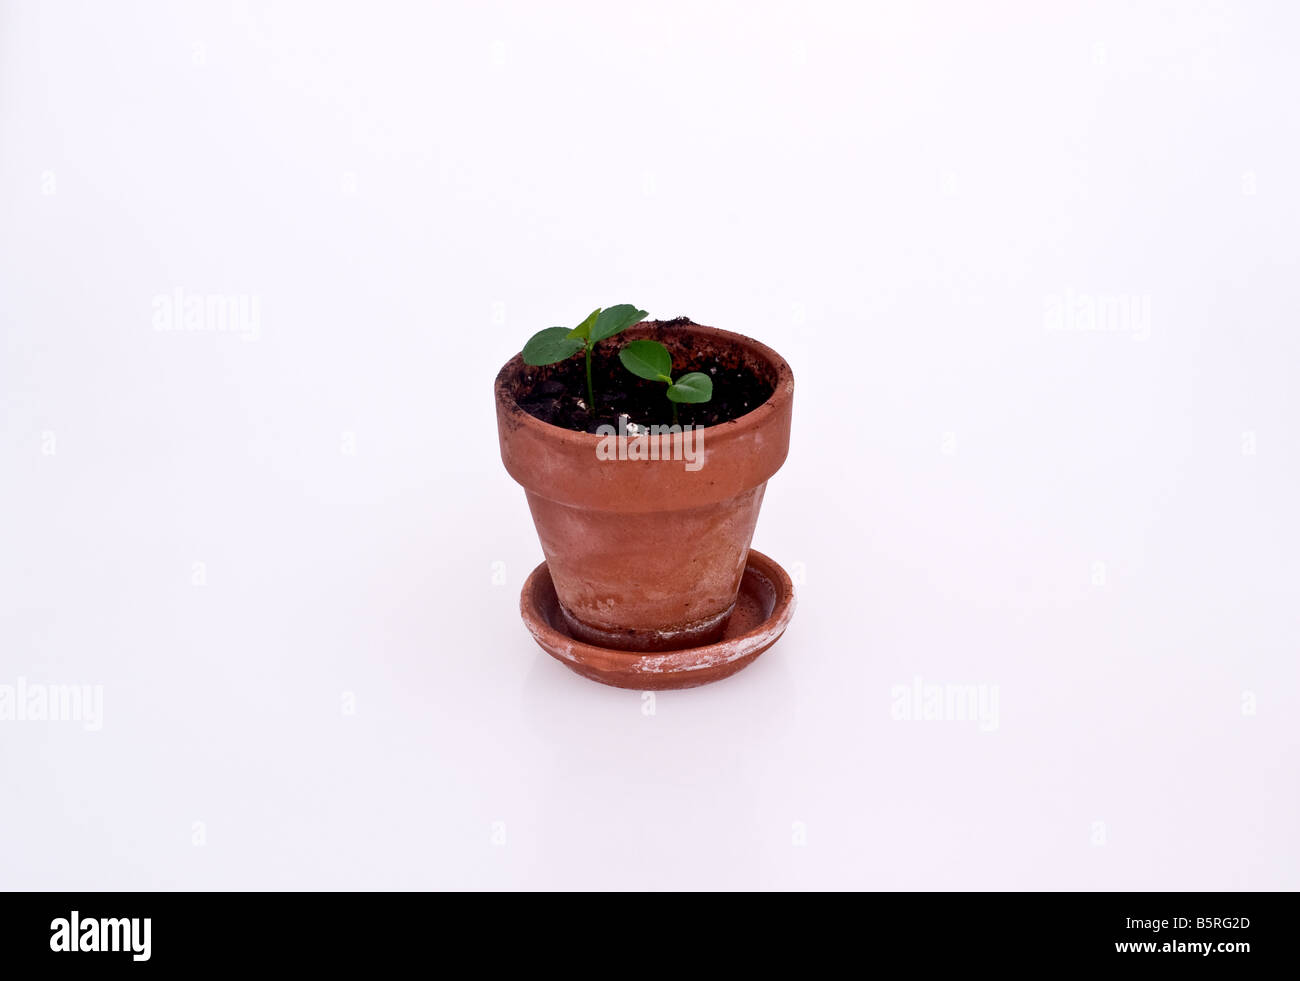 Two new growth key lime tree seedlings in an earthenware flower pot Stock Photo